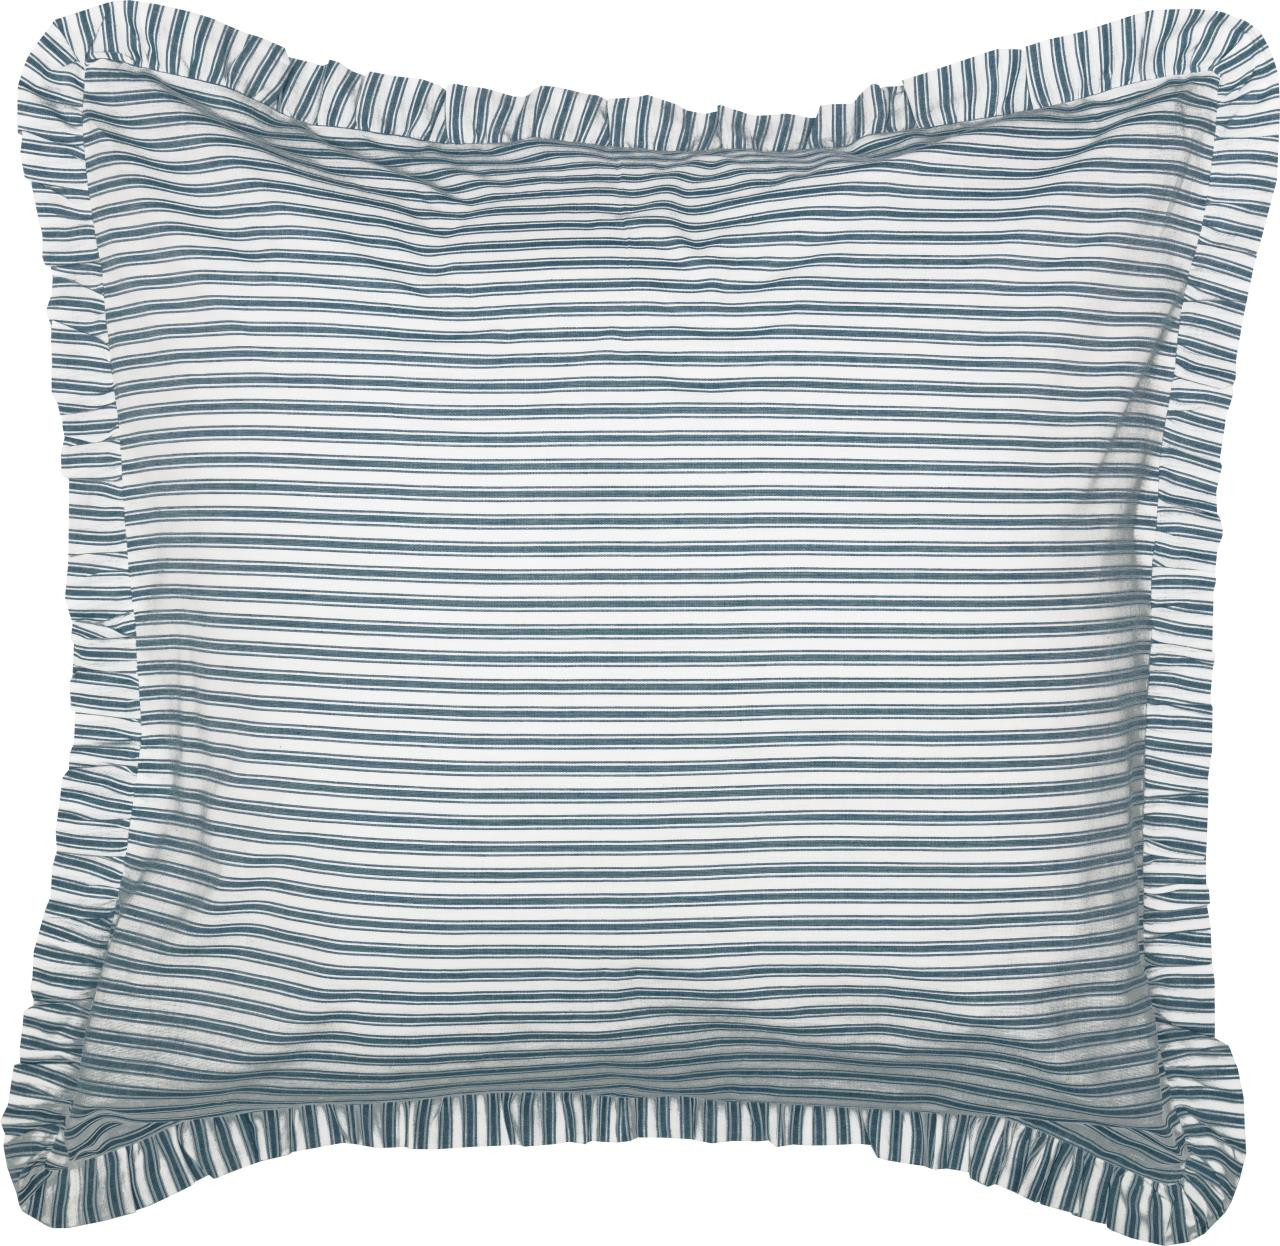 Sawyer Mill Blue Barn Star Pillow 18x18